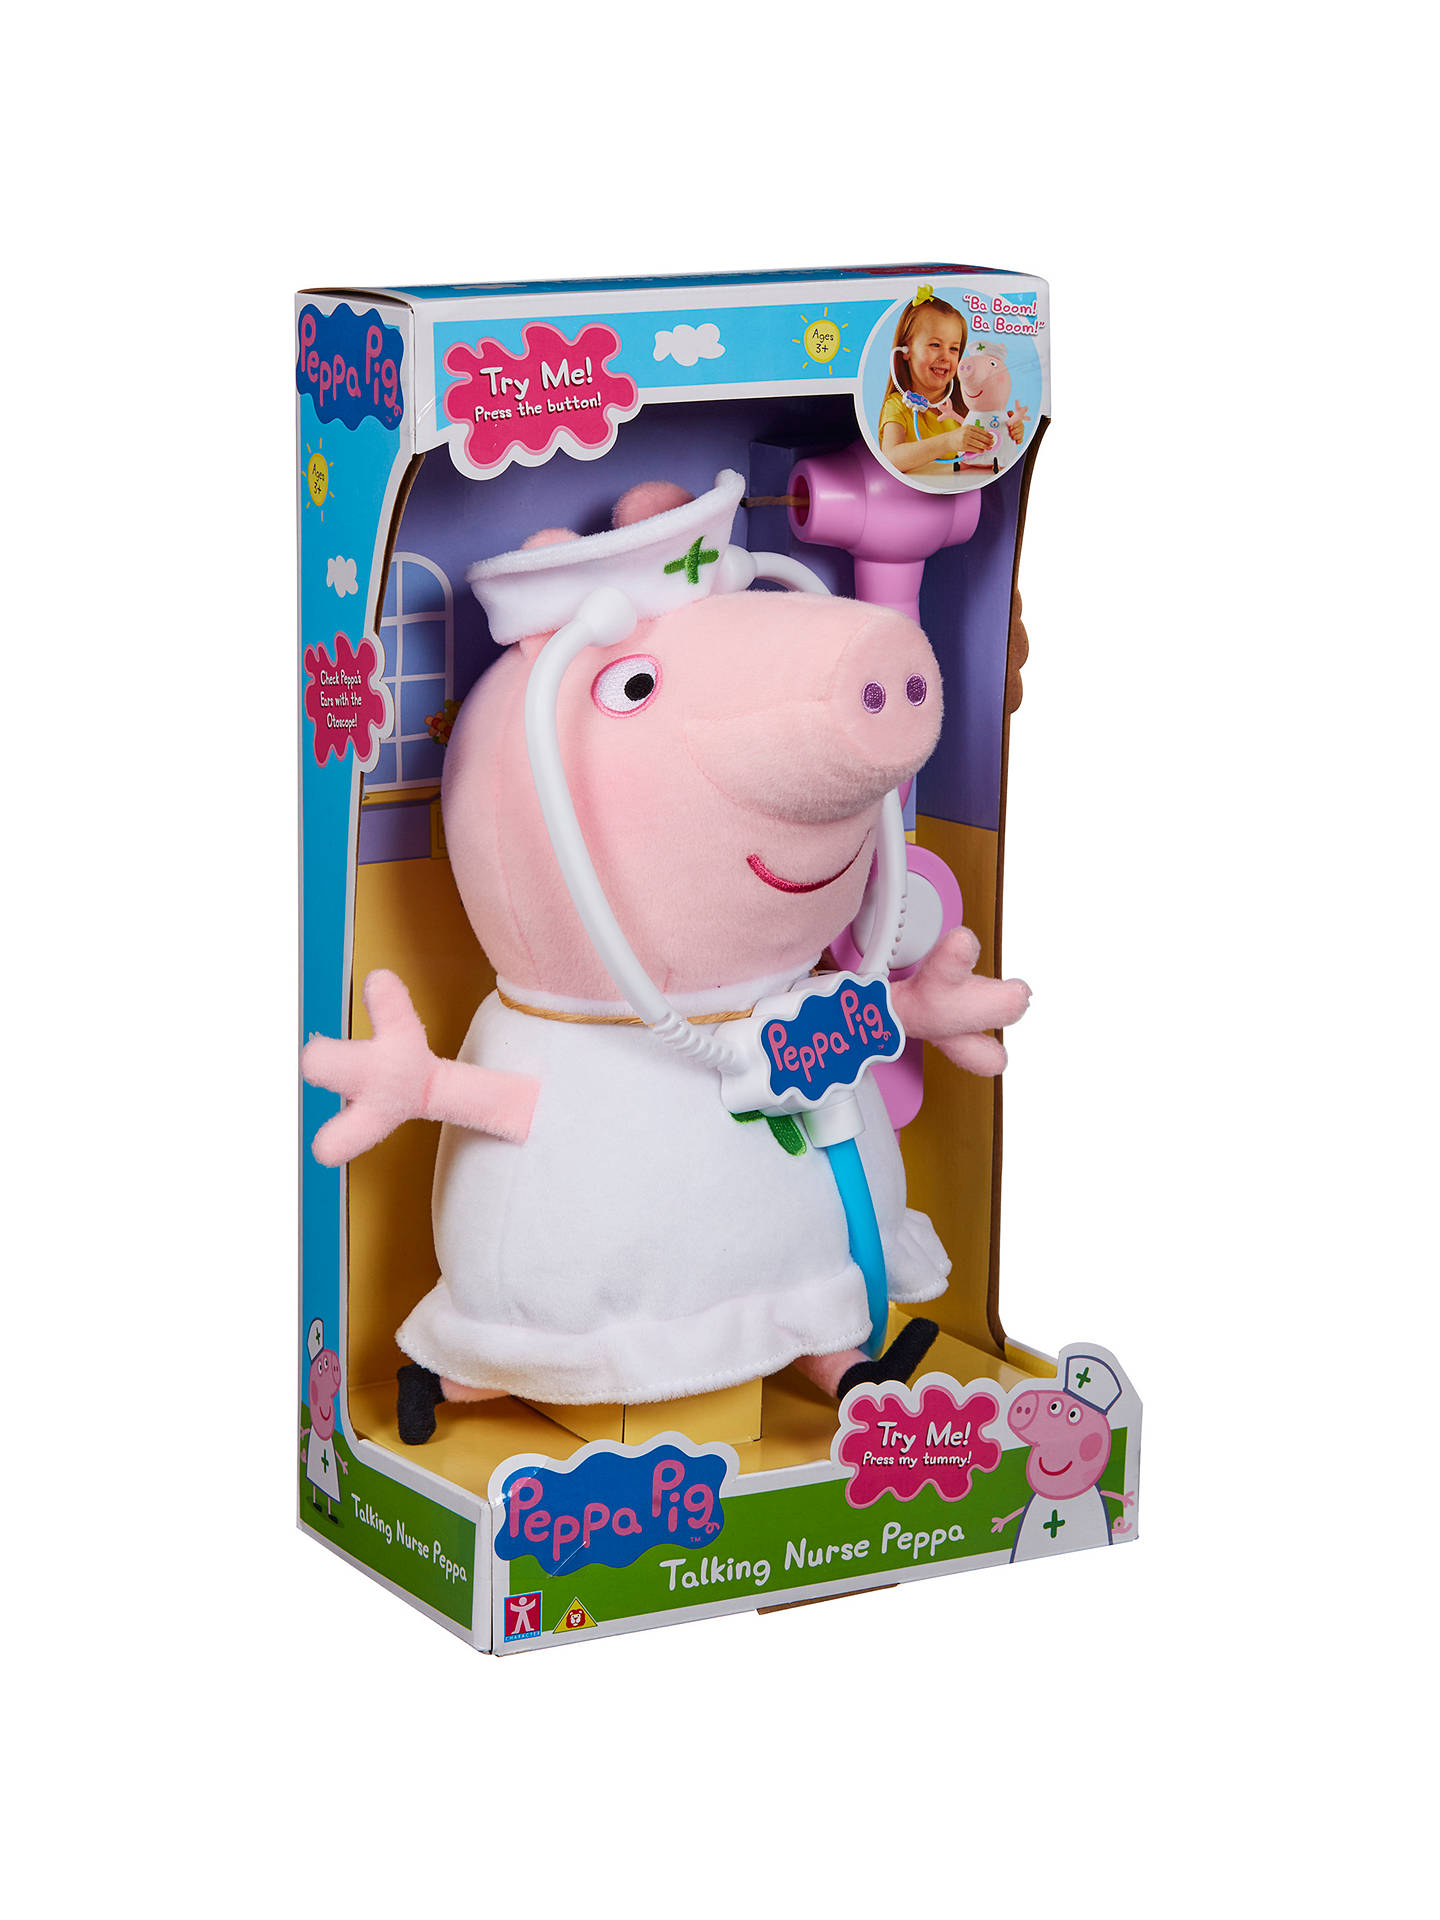 Peppa Pig Toy Talking Nurse Peppa Electronic Toy Plush With Stethoscope NEW 